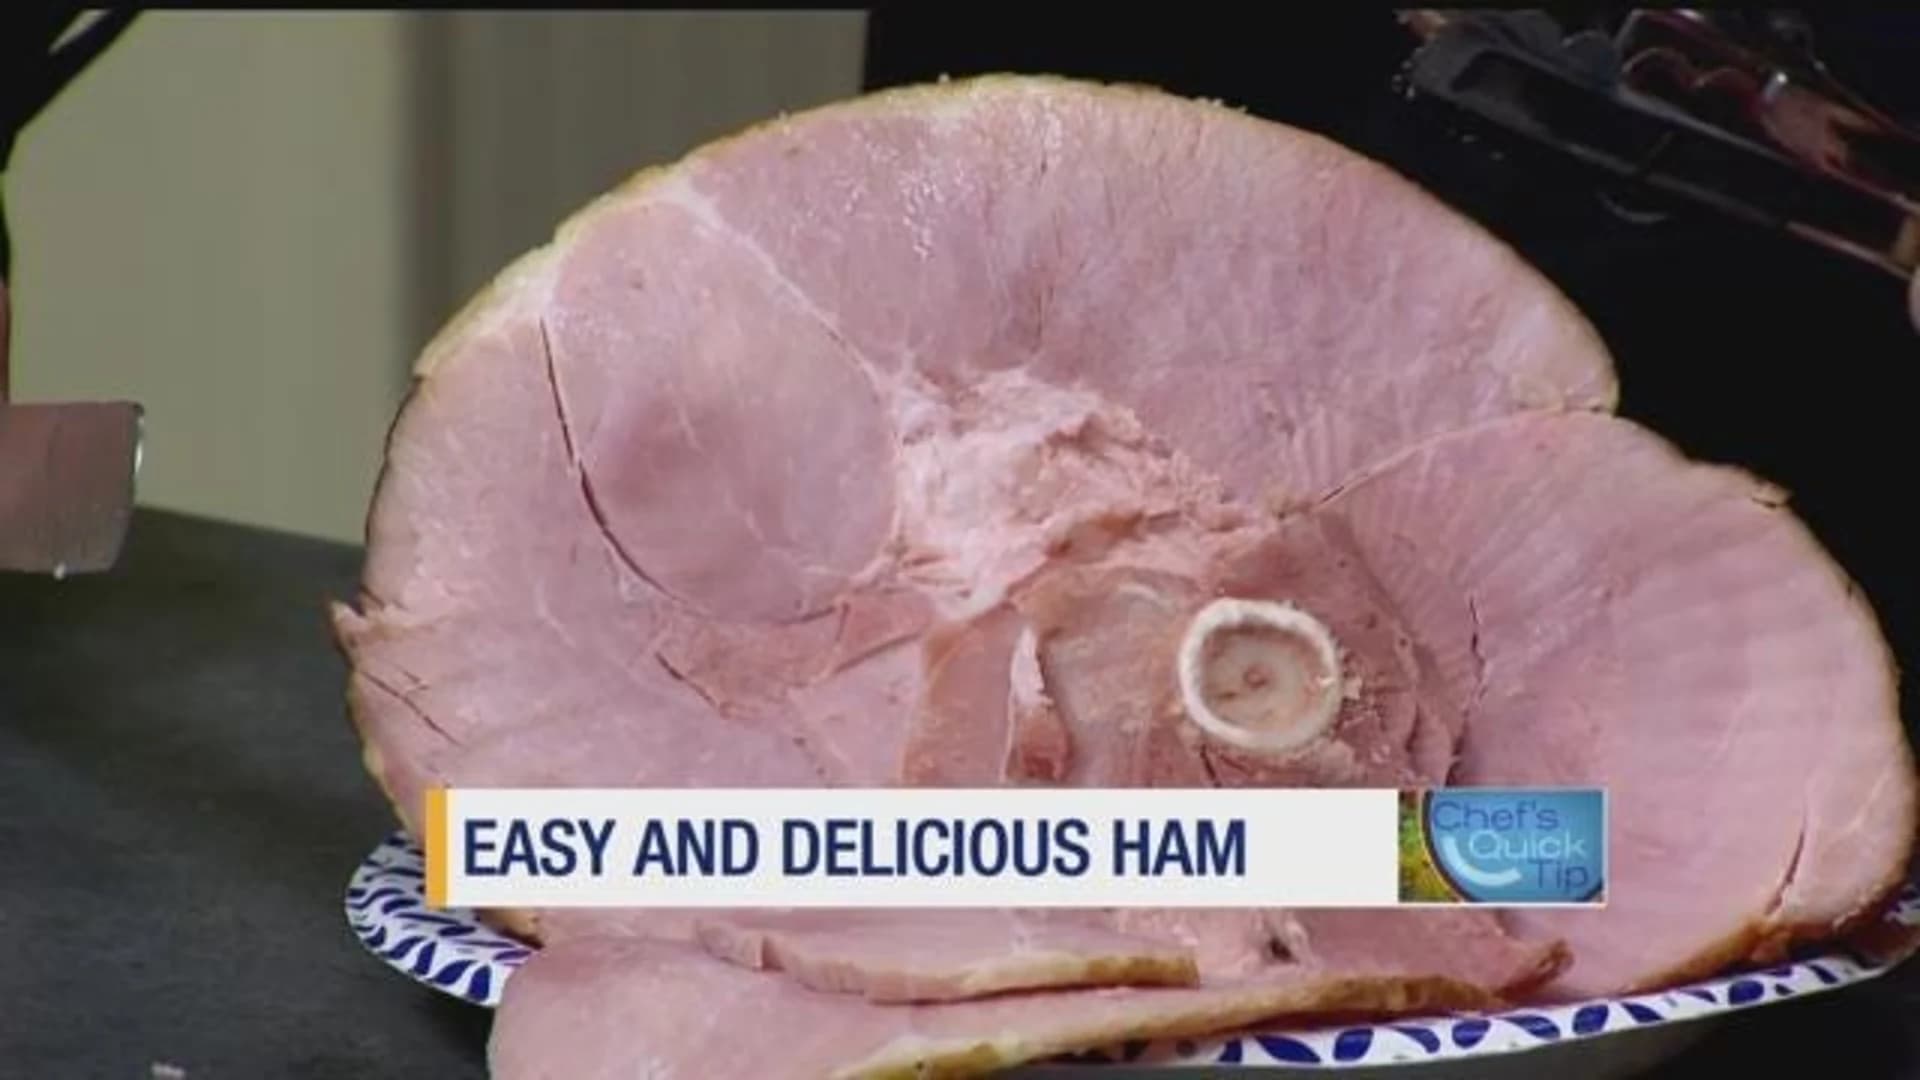 Chef's Quick Tips: Balsamic honey glazed ham